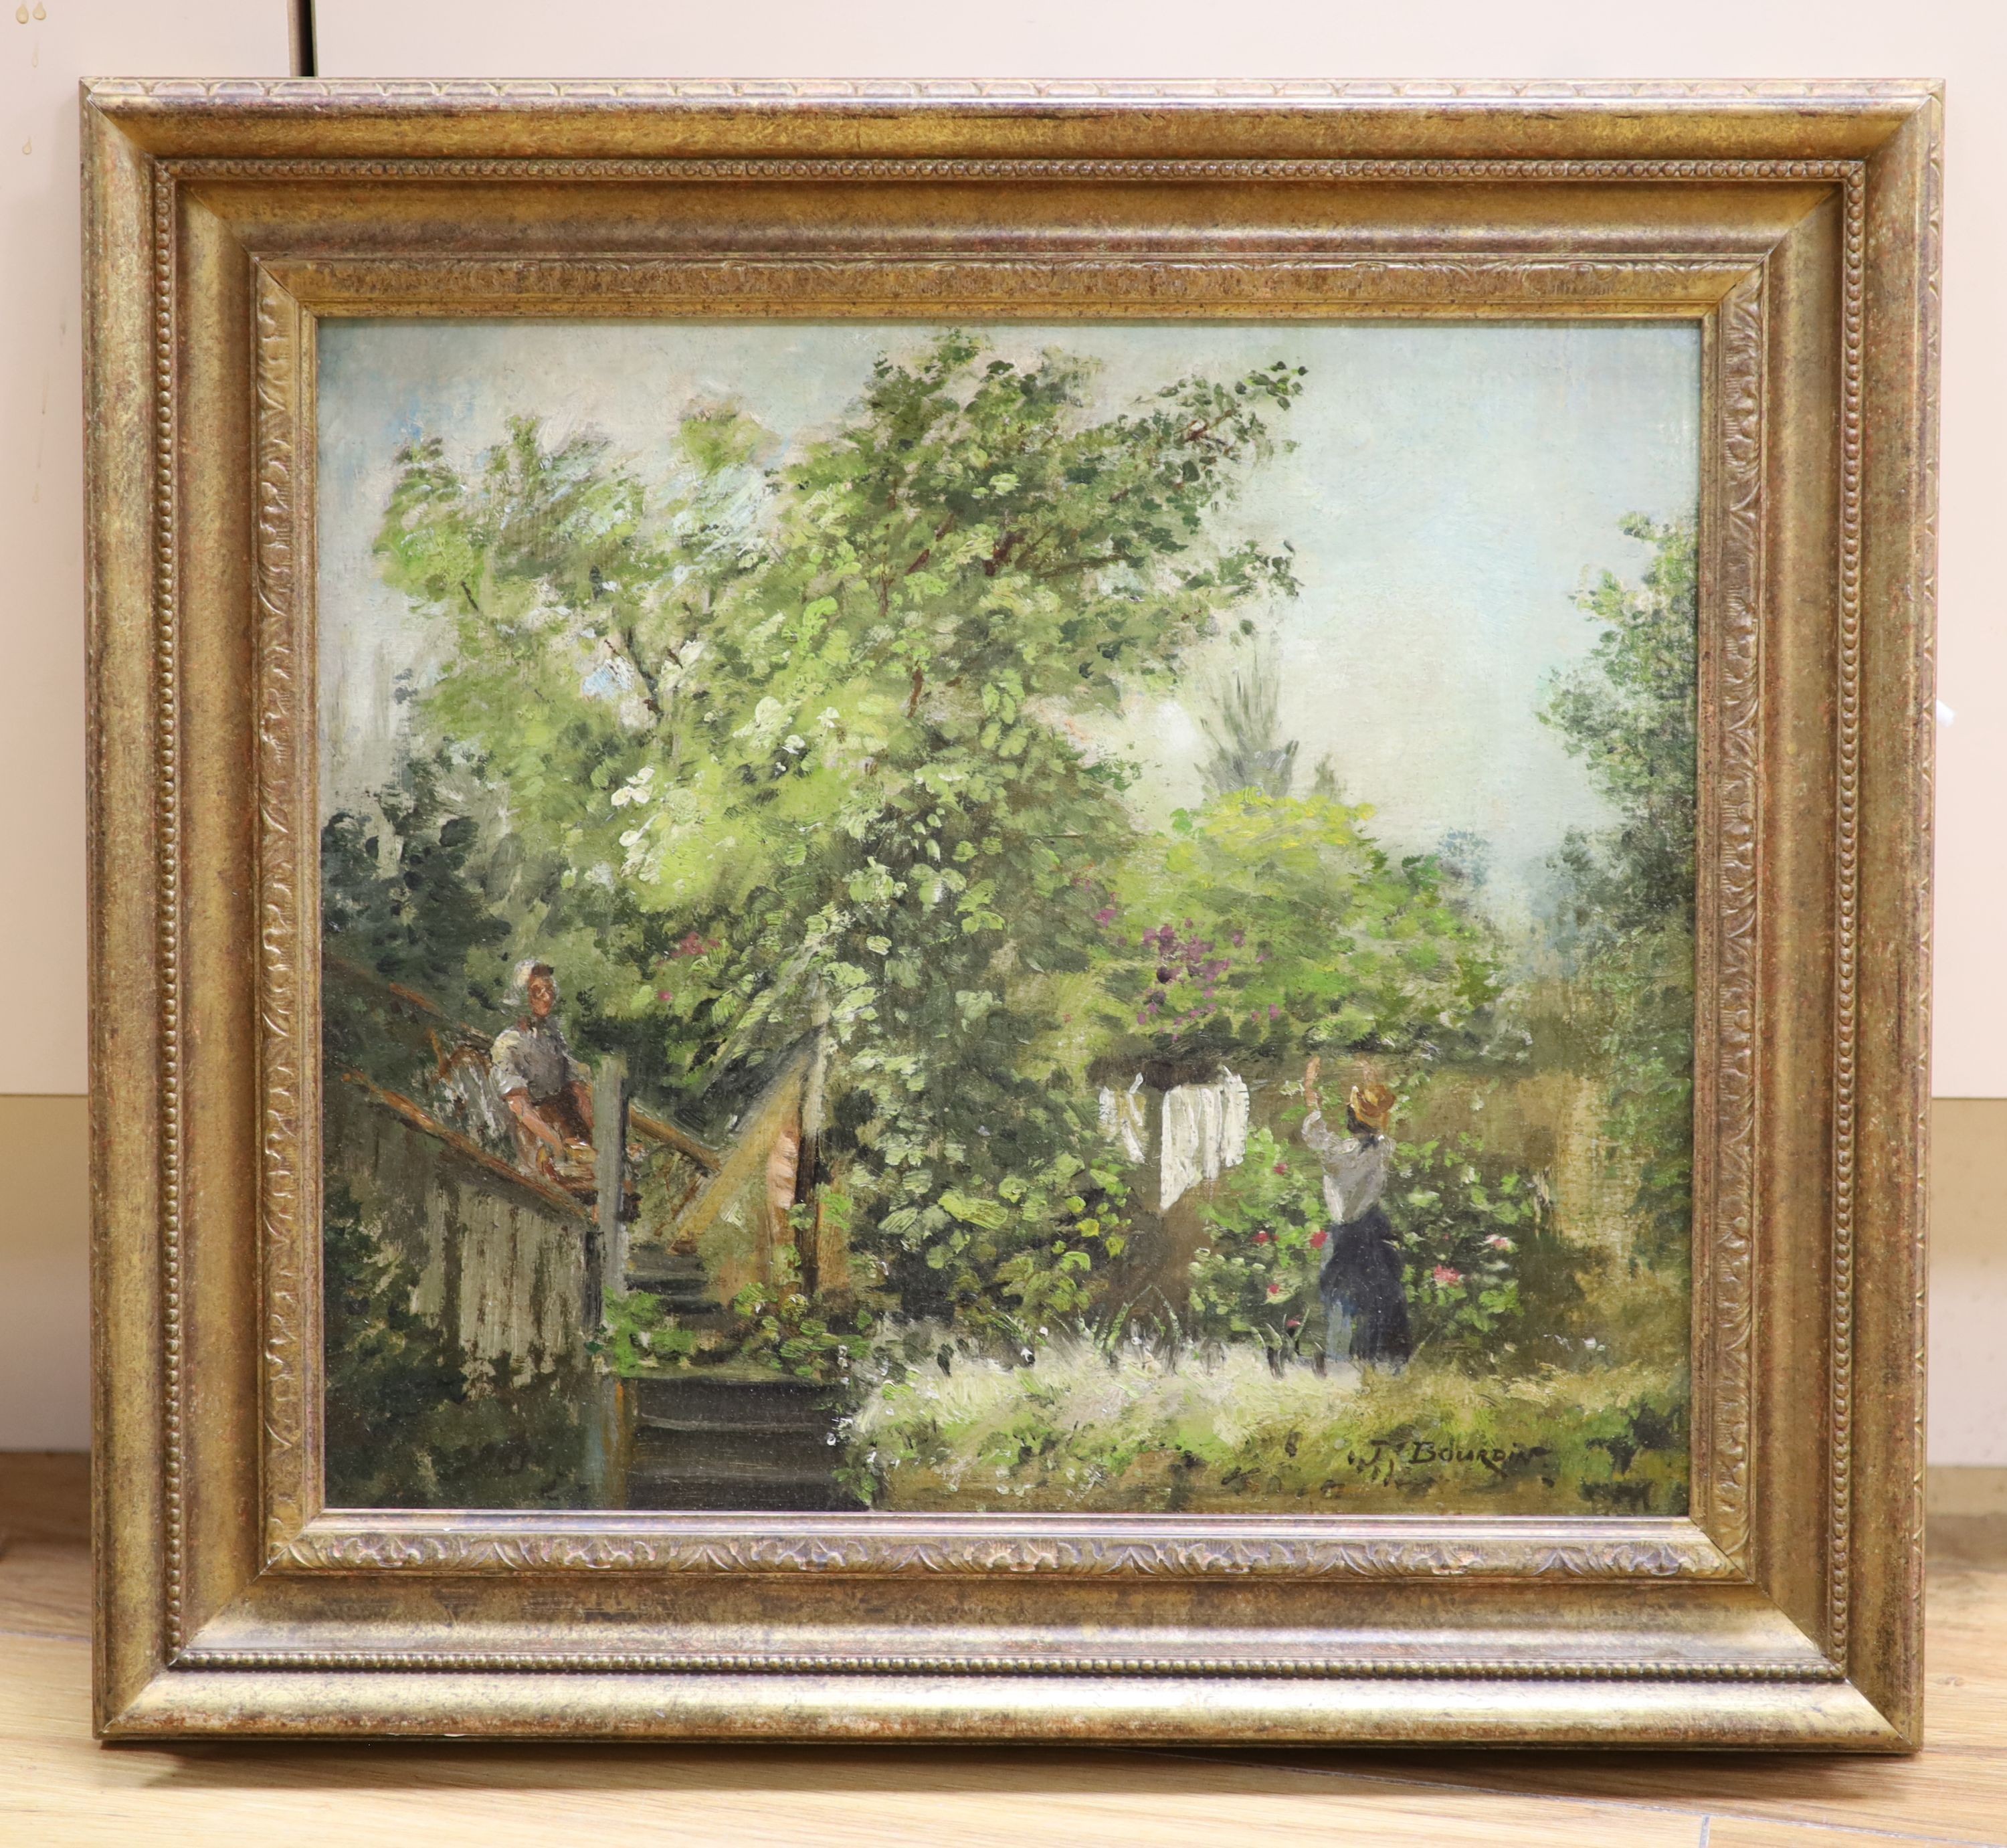 J.Bourdin, oil on wooden panel, Figures in a garden, signed, 30 x 35cm